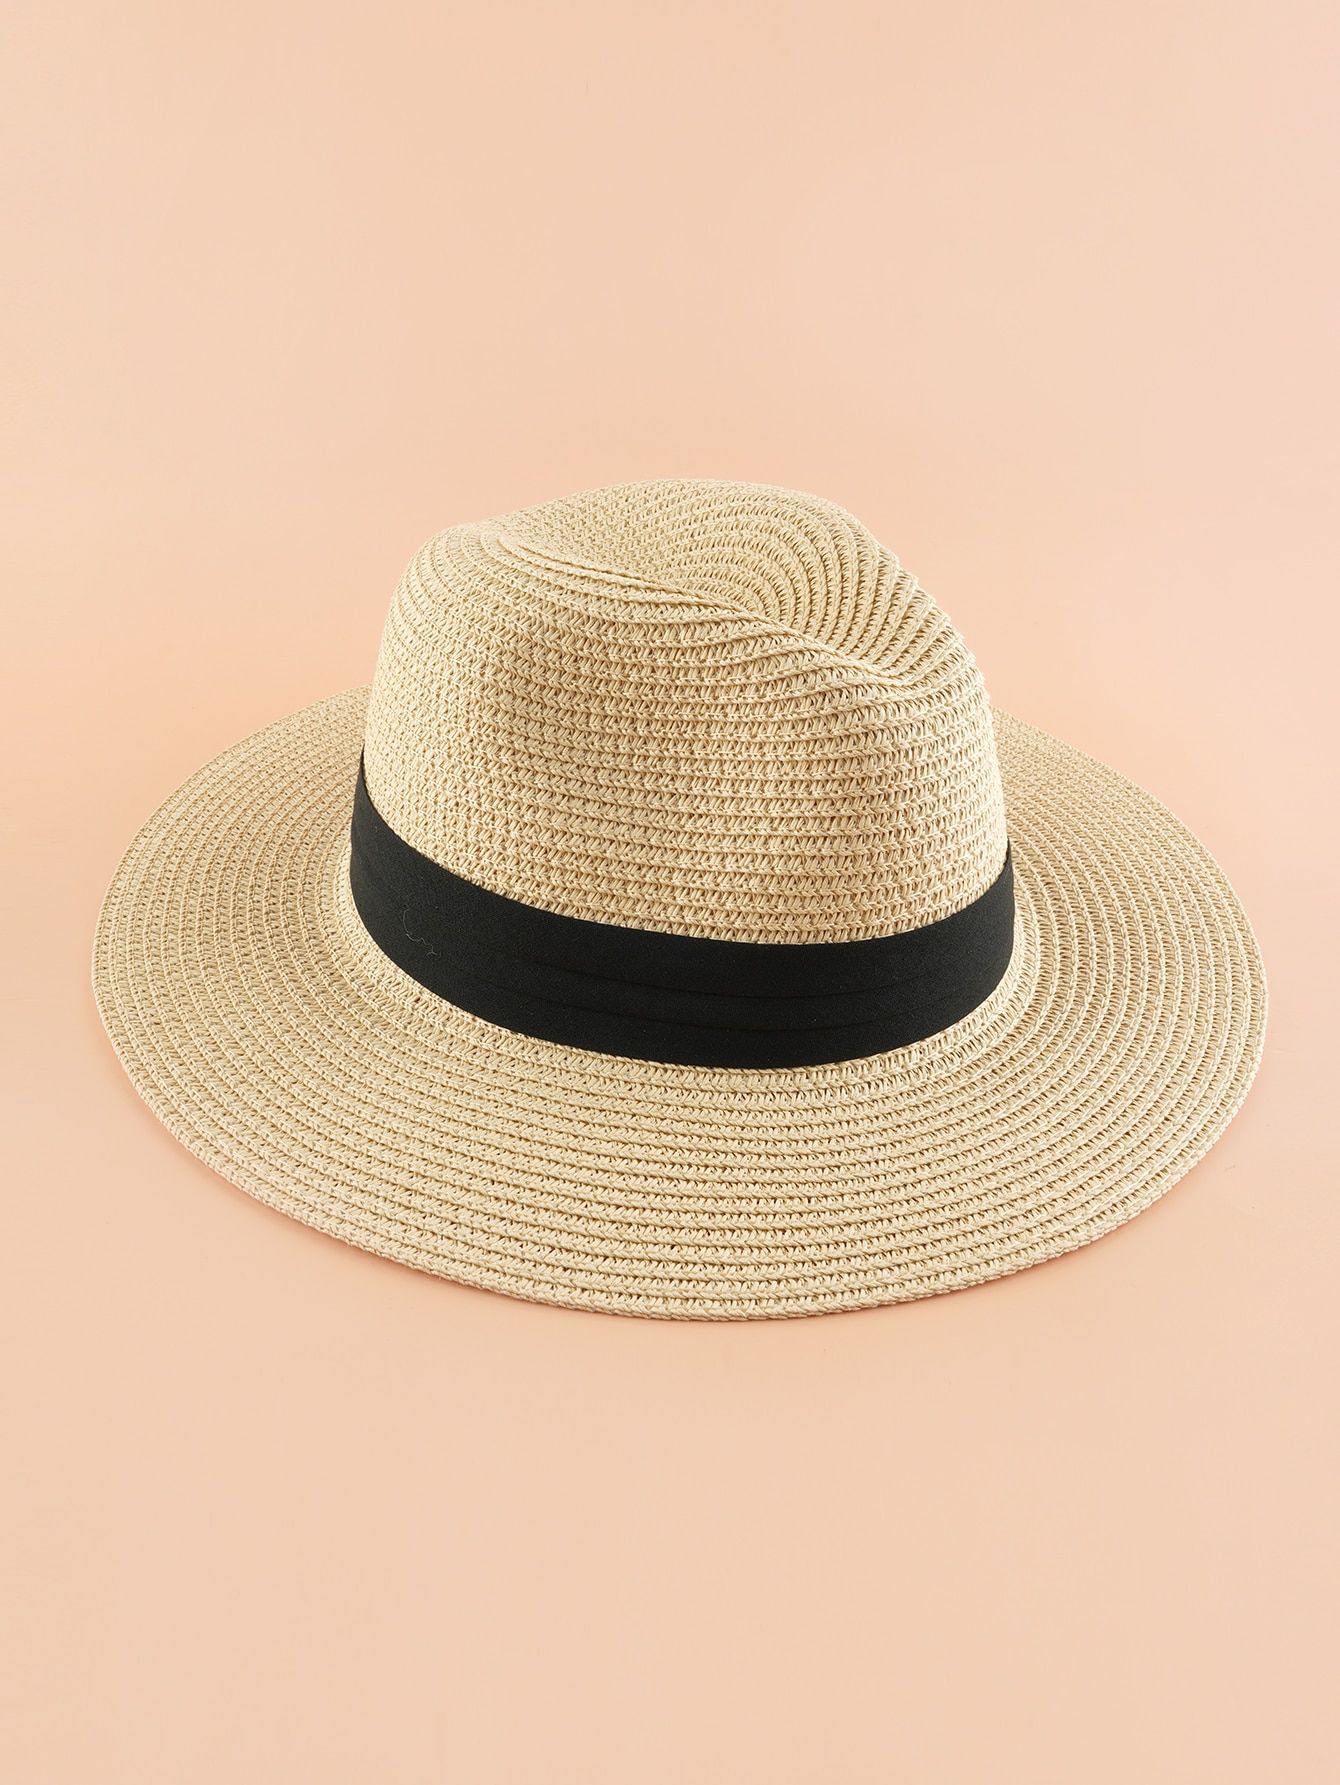 EMERY ROSE Minimalist Straw Hat | SHEIN